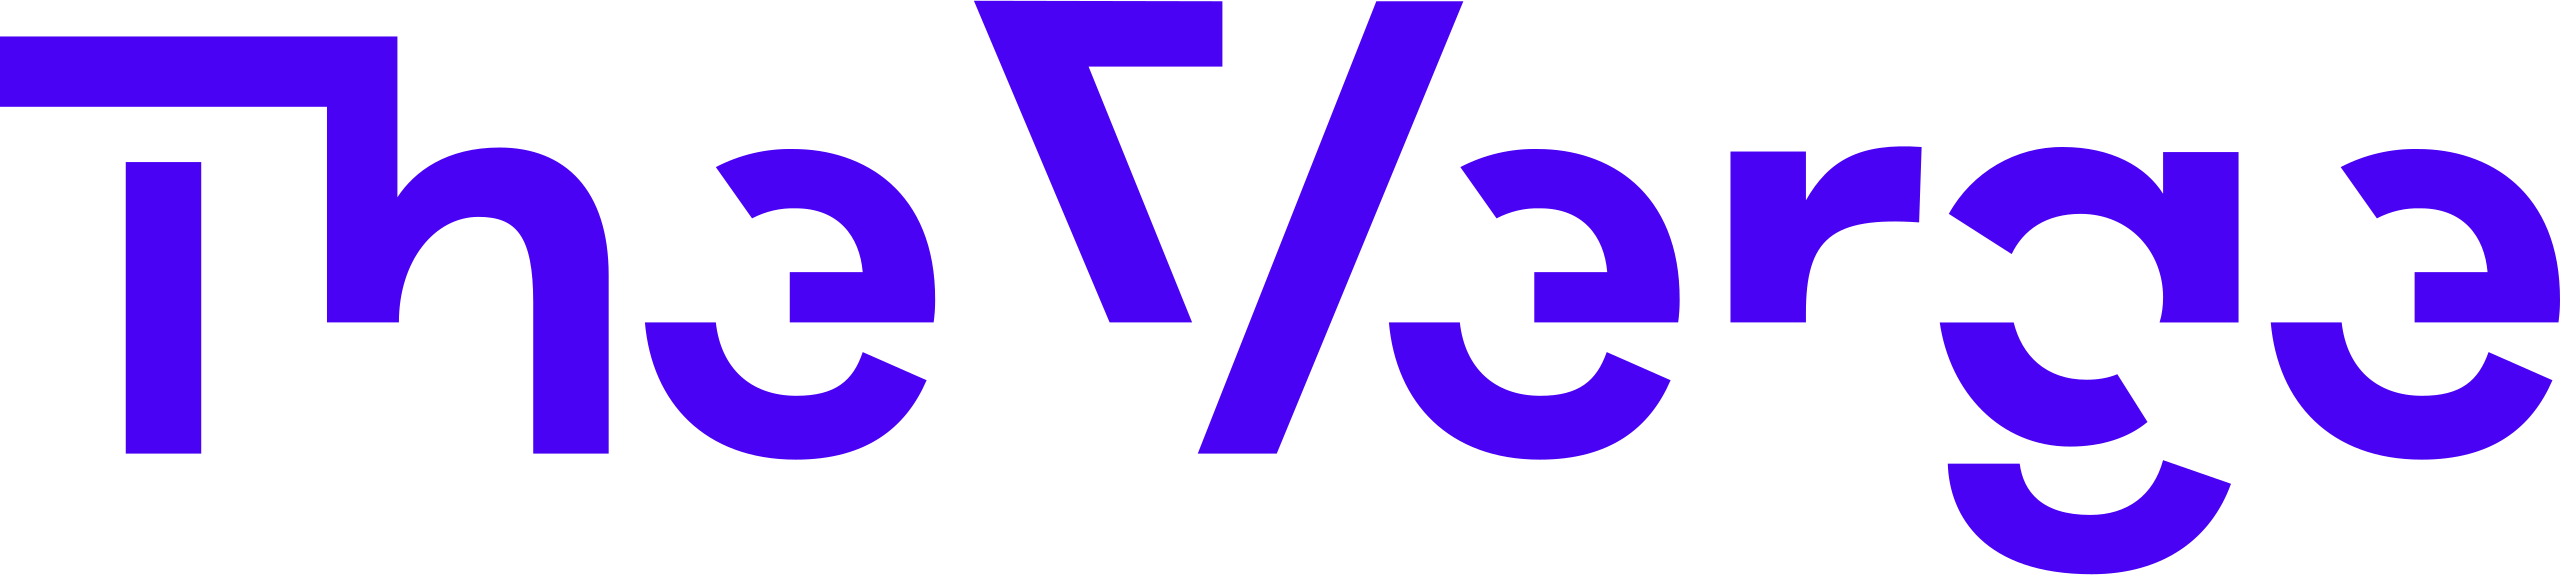 the_verge_logo